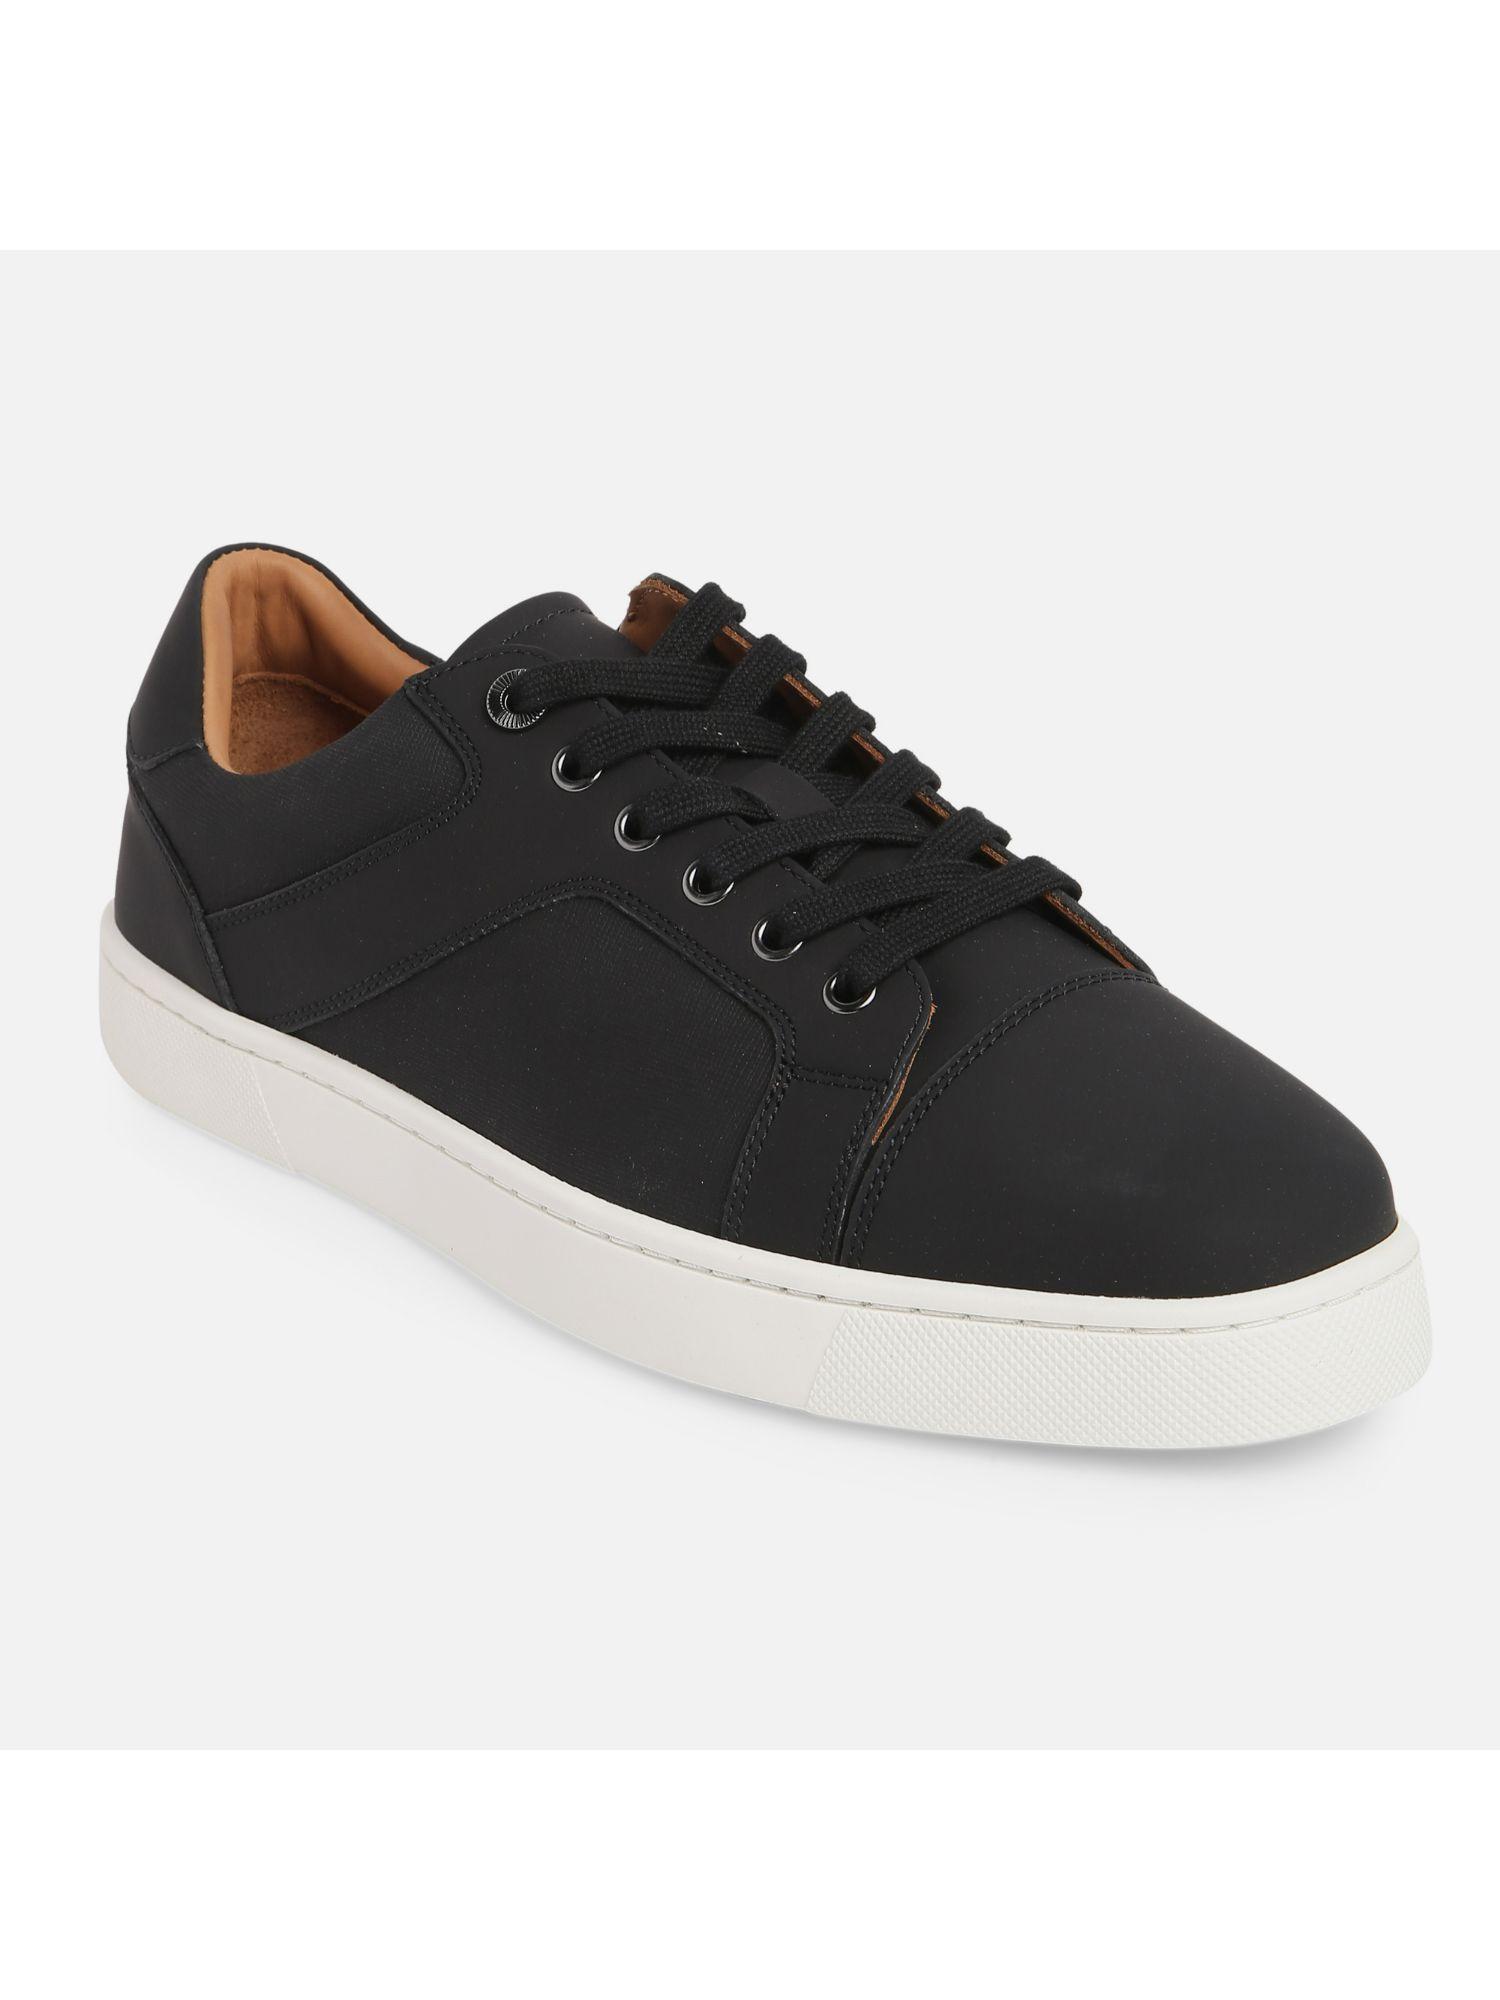 crossfield leather black solid sneakers